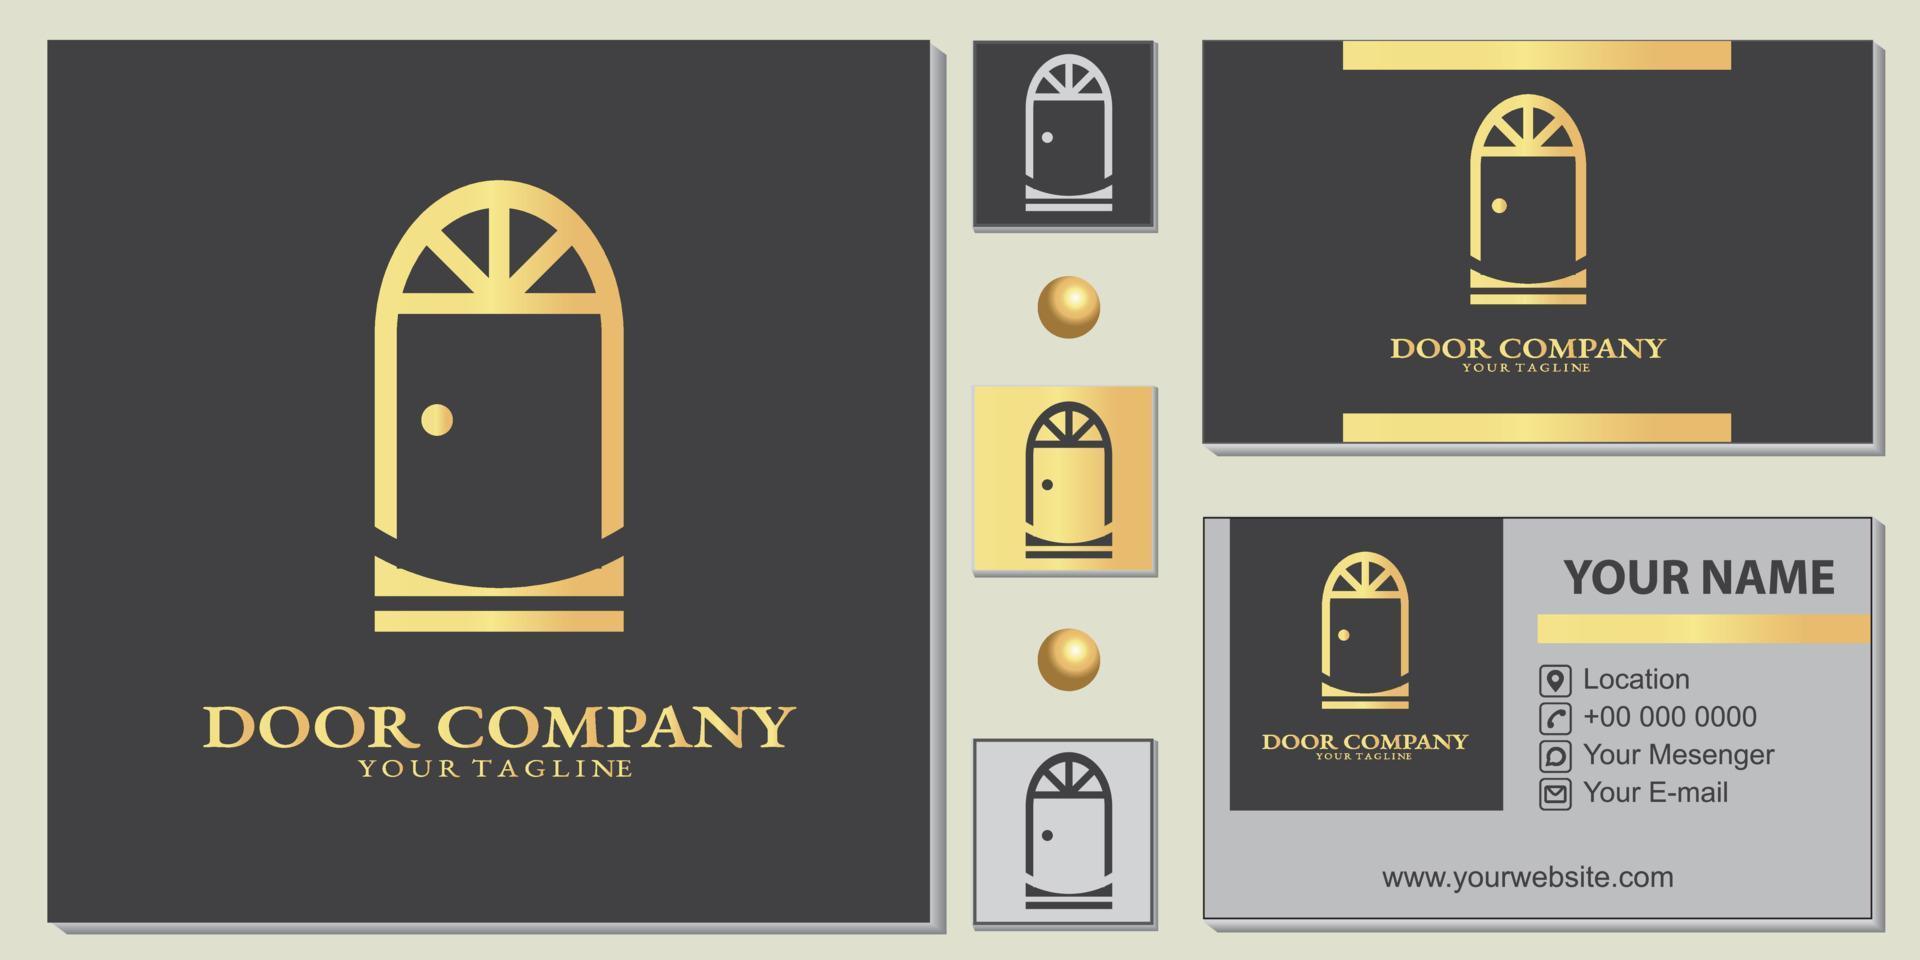 Luxury gold door logo premium template with elegant business card vector eps 10